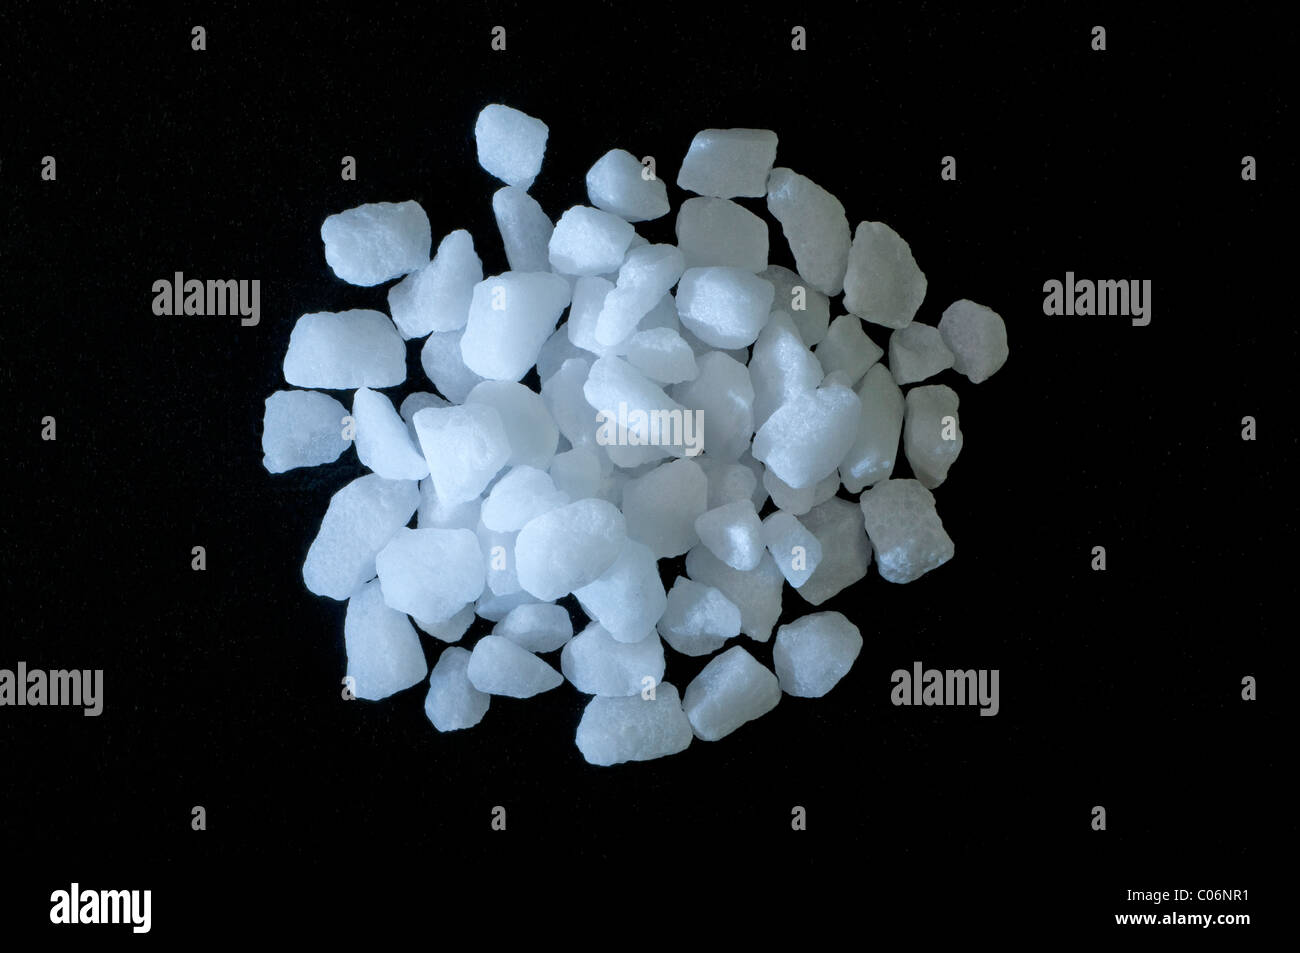 Table Salt (sodium chloride), studio picture against a black background. Stock Photo